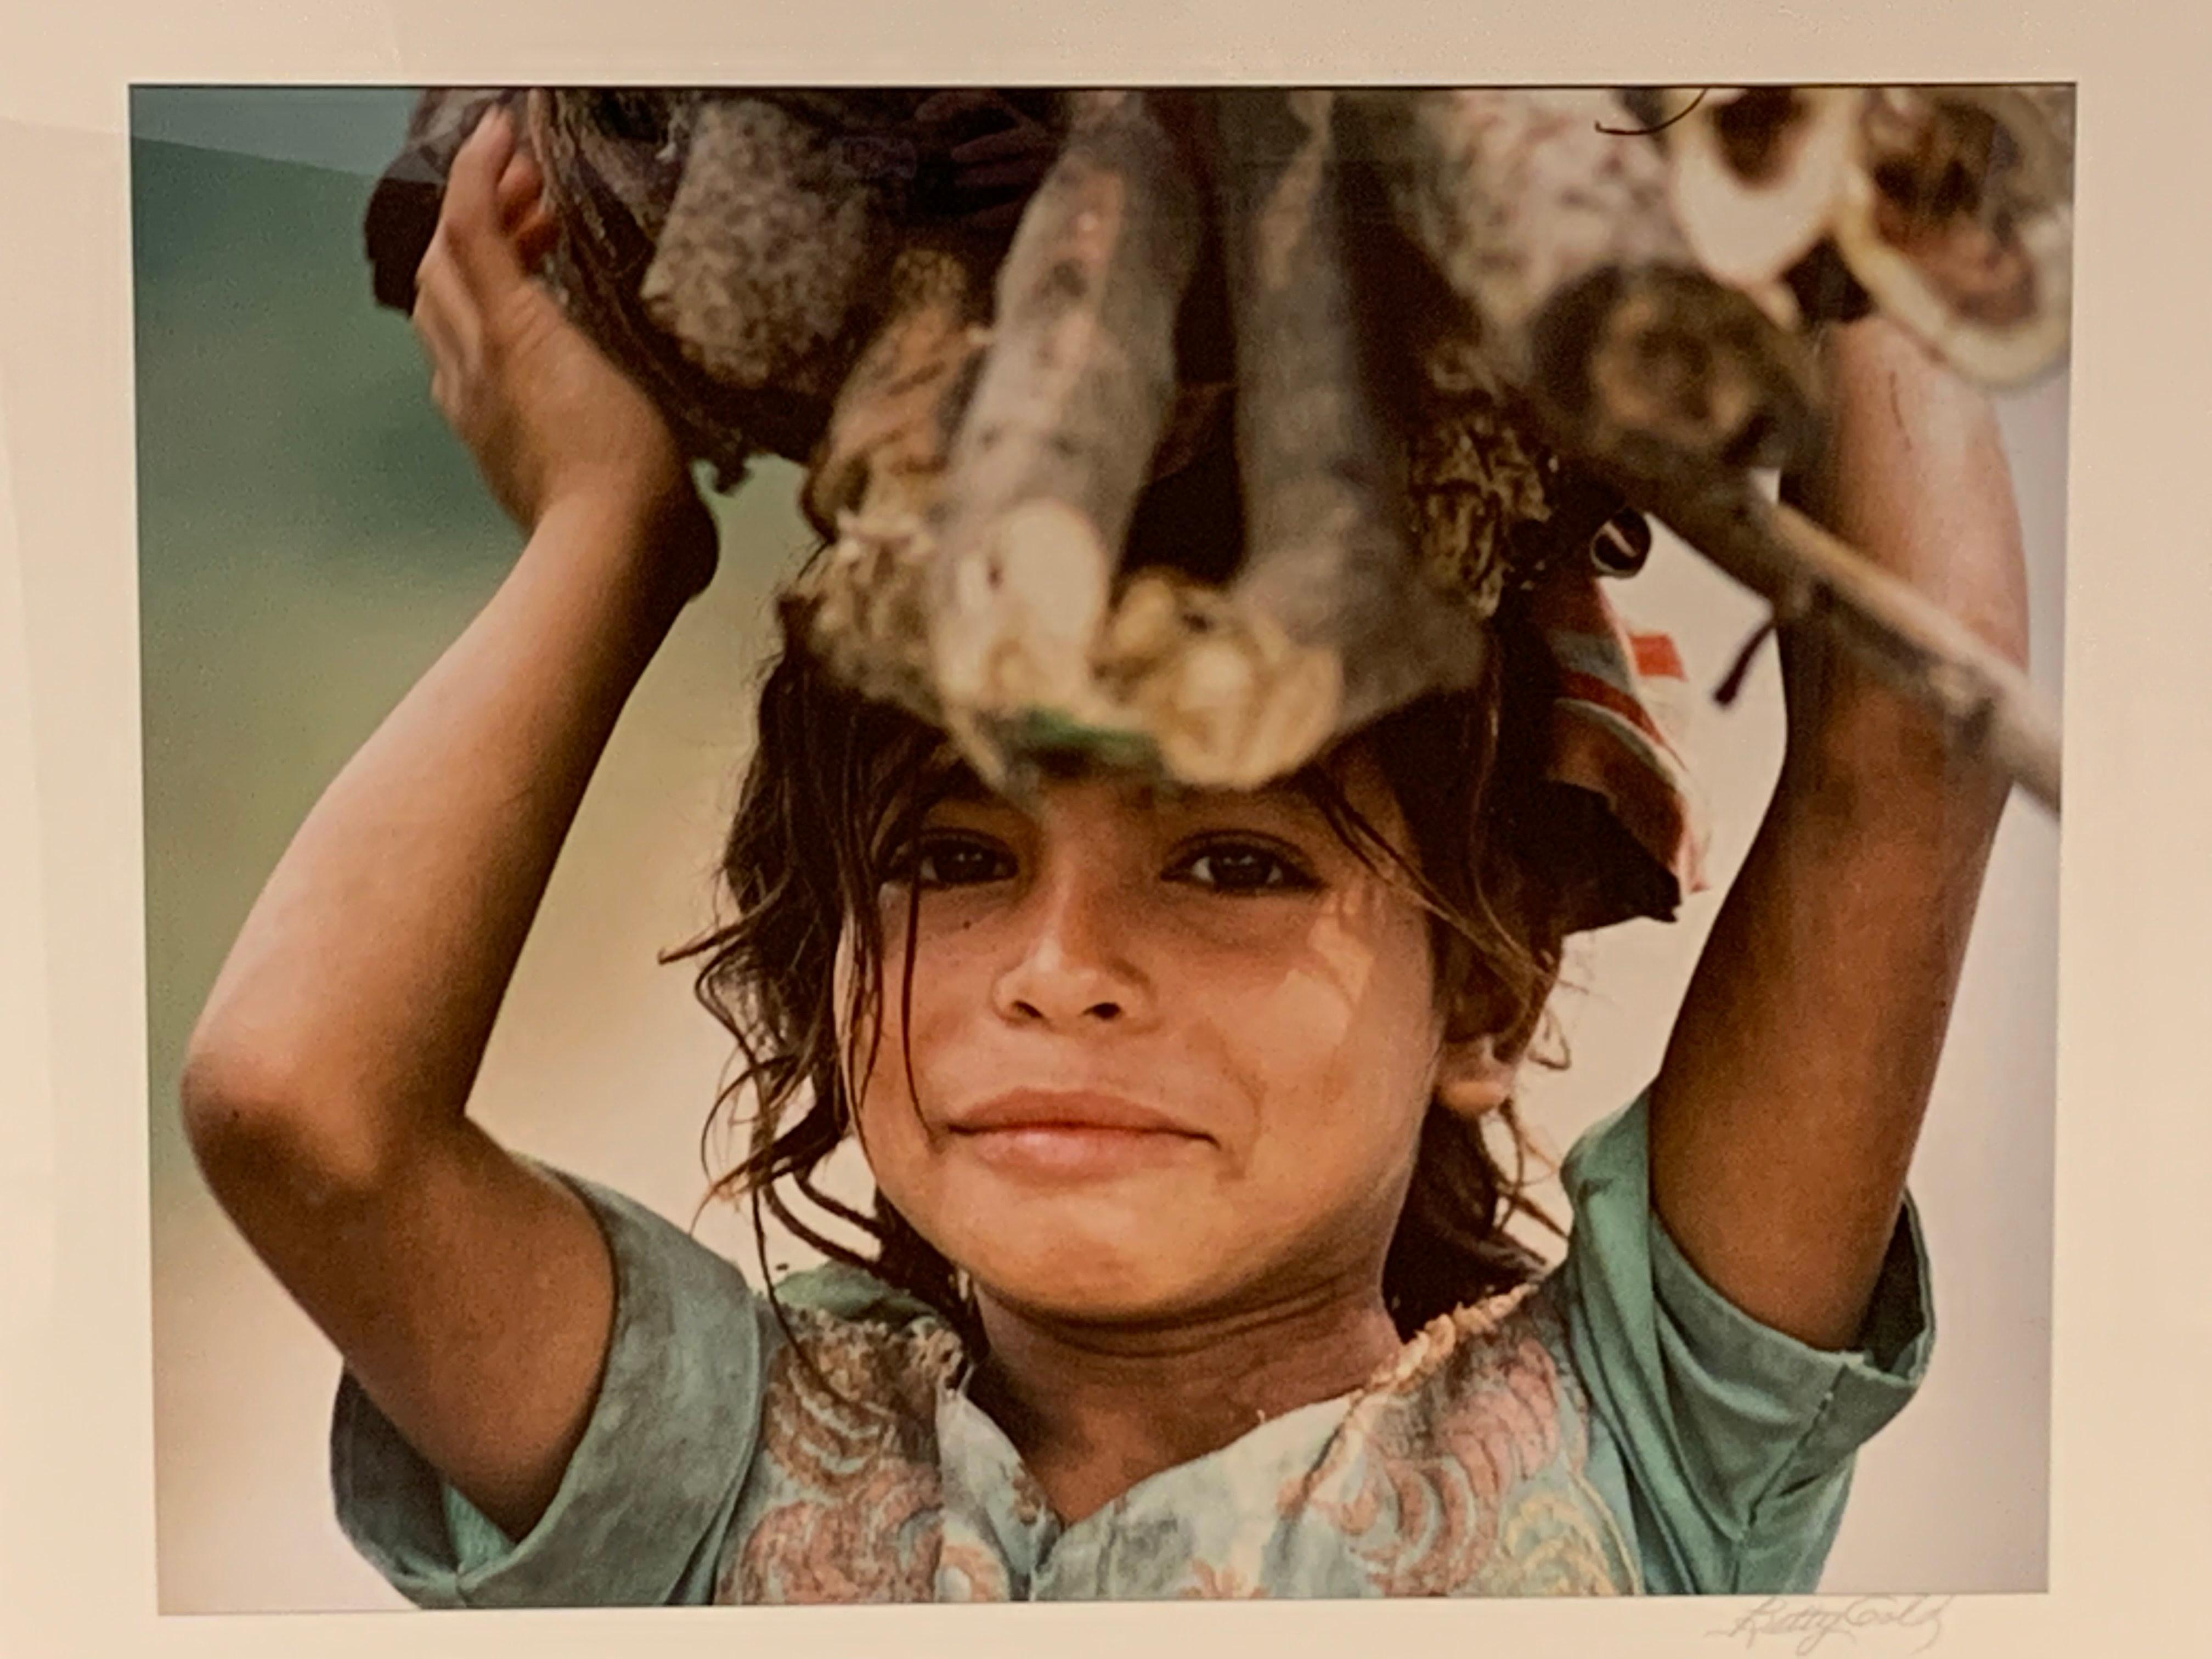 Betty Gold Color Photograph - V.O.W. Honduras (1983)